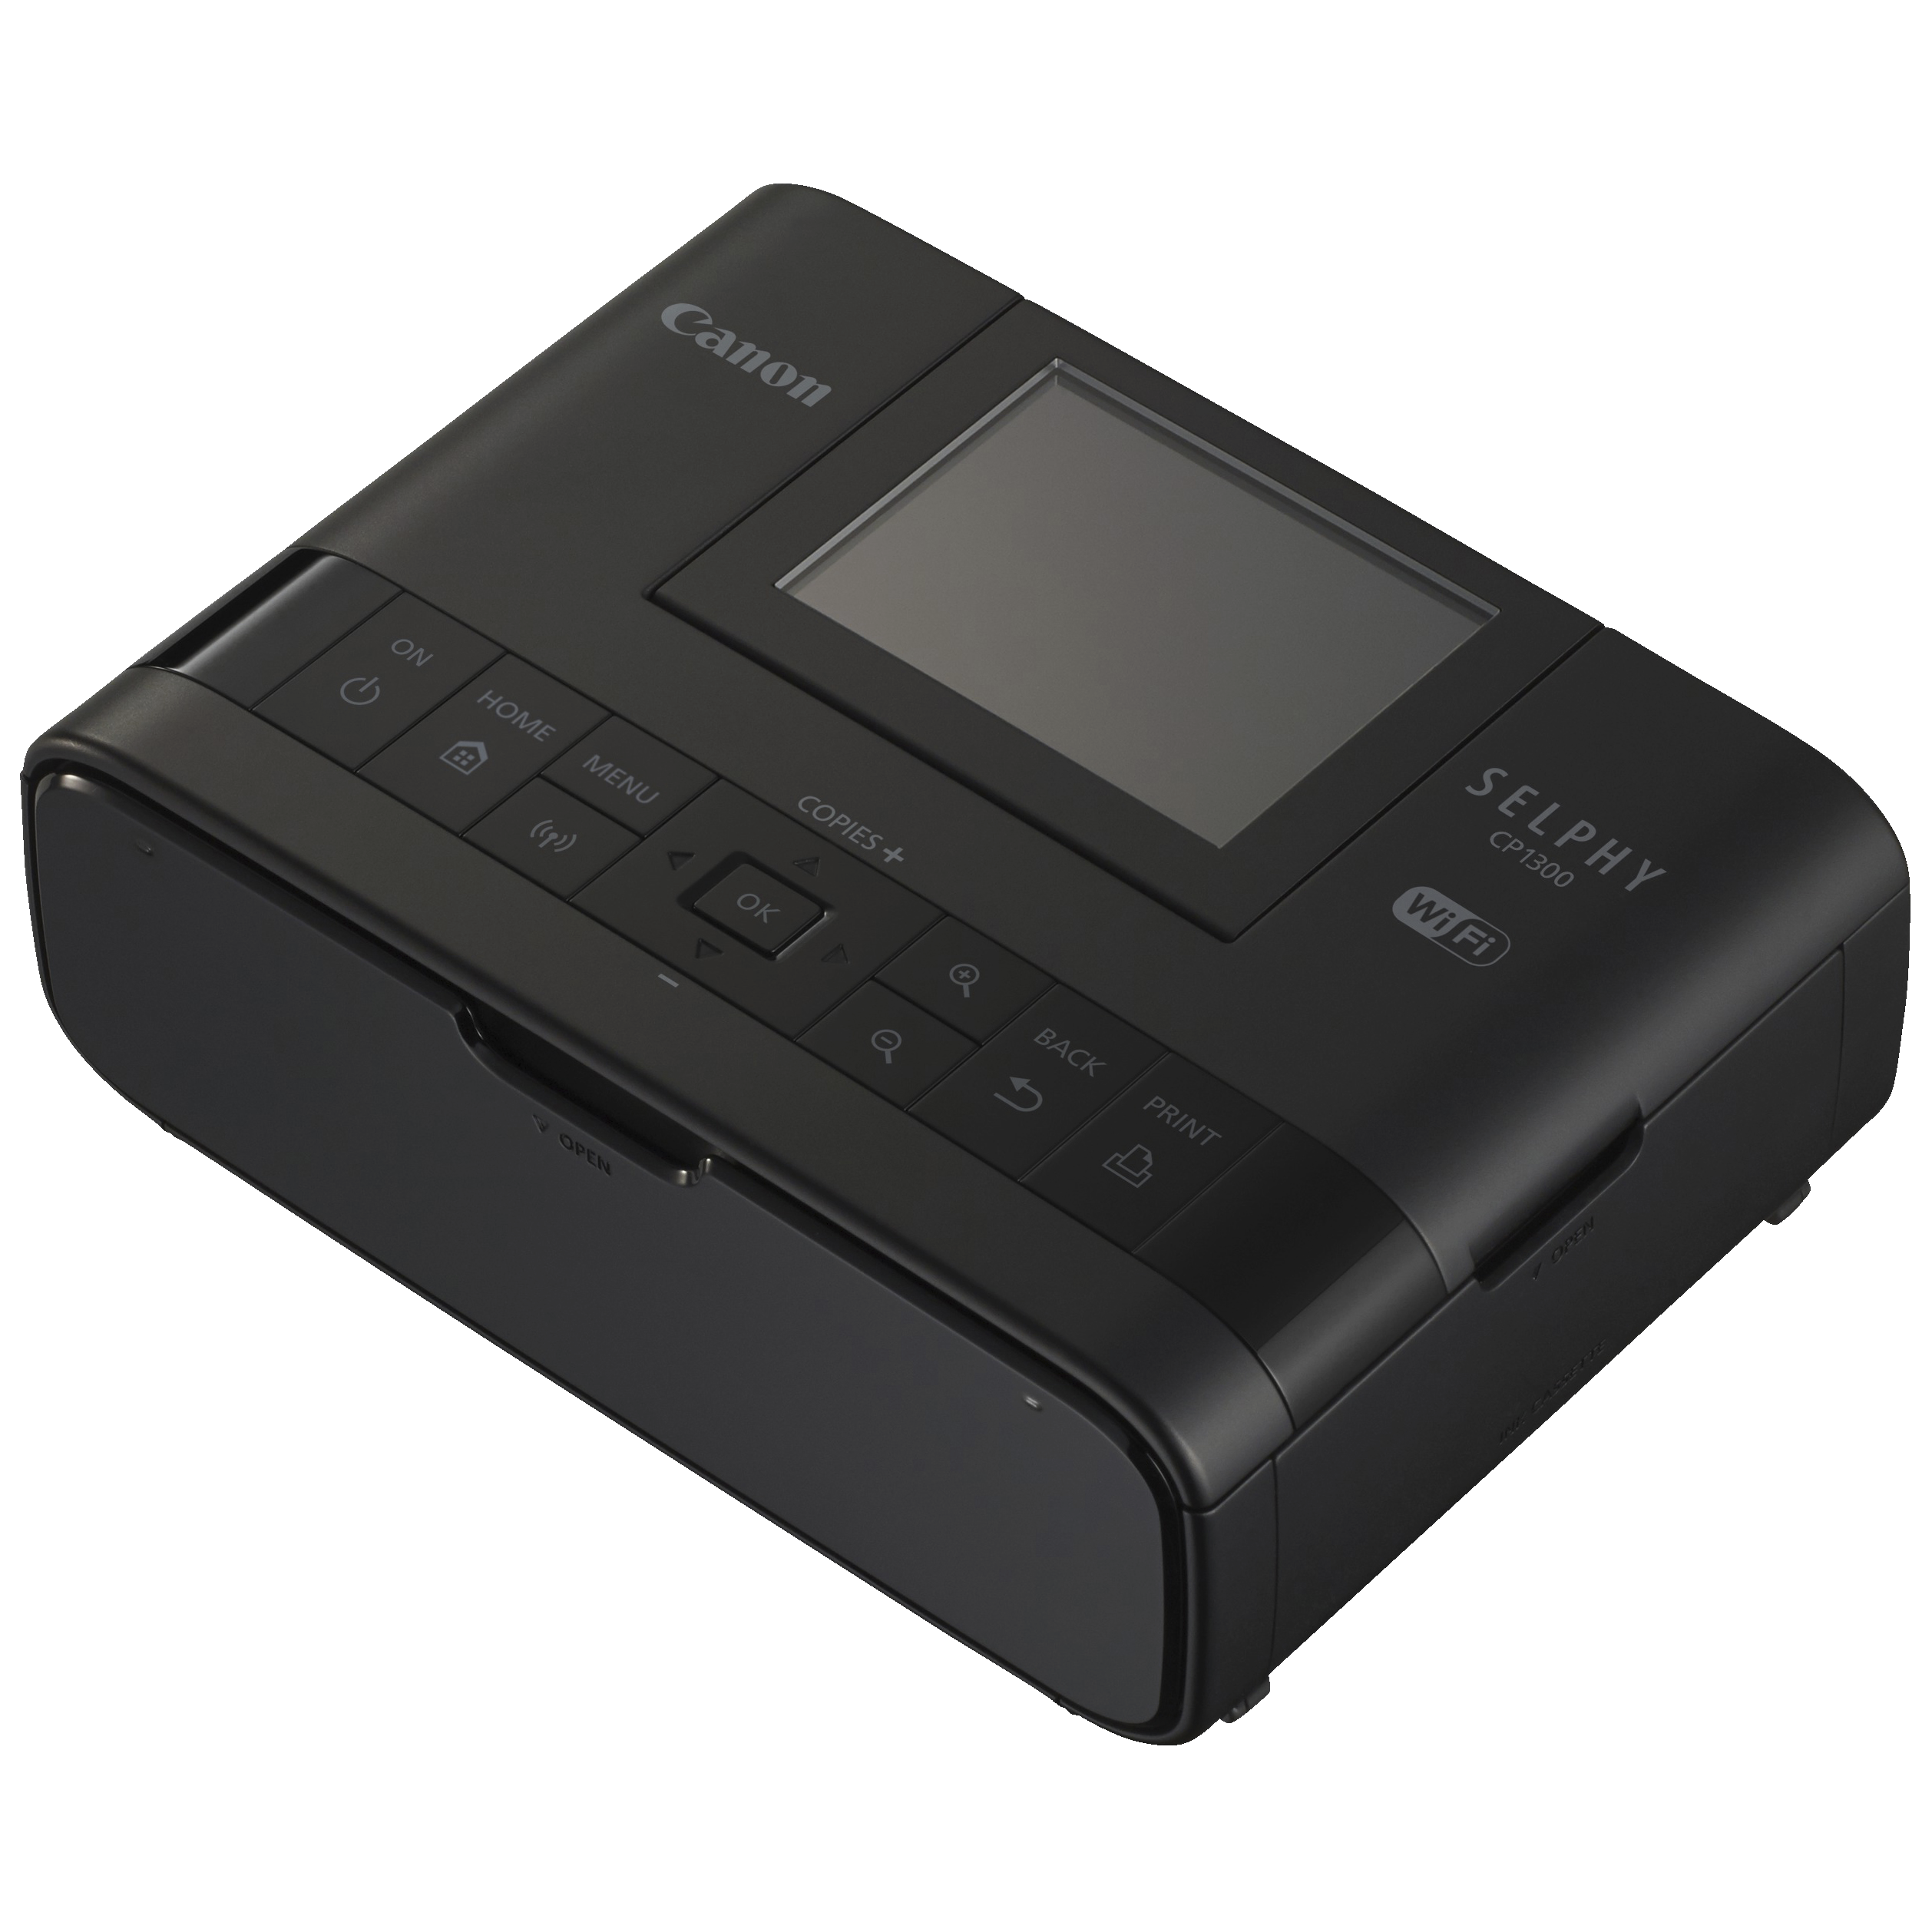 Canon Selphy CP1300 WiFi fotoskrivare (svart) - Portabel skrivare ...